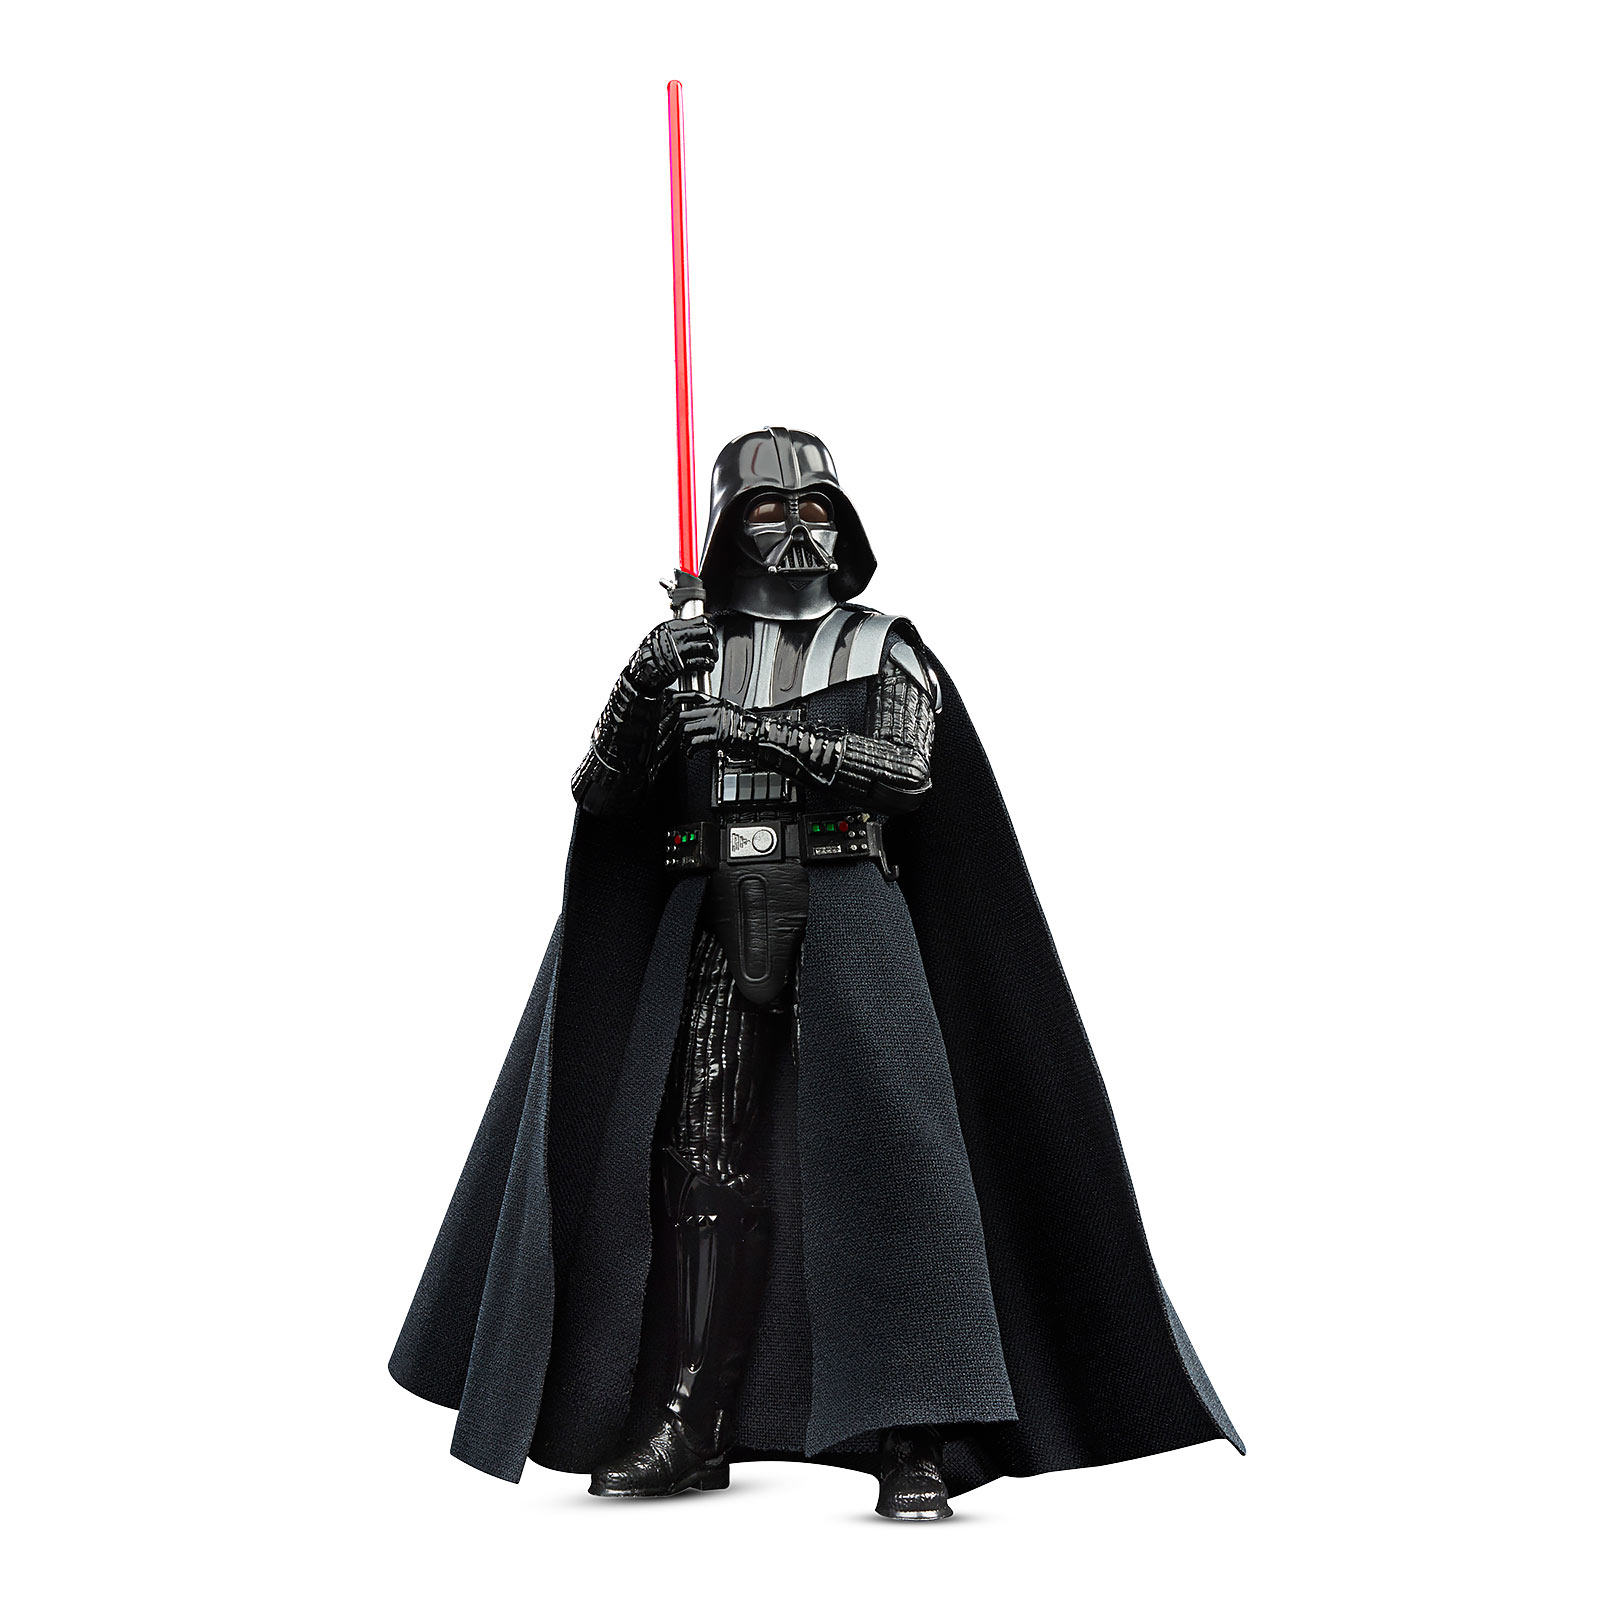 Darth Vader Action Figure - Star Wars Obi-Wan Kenobi